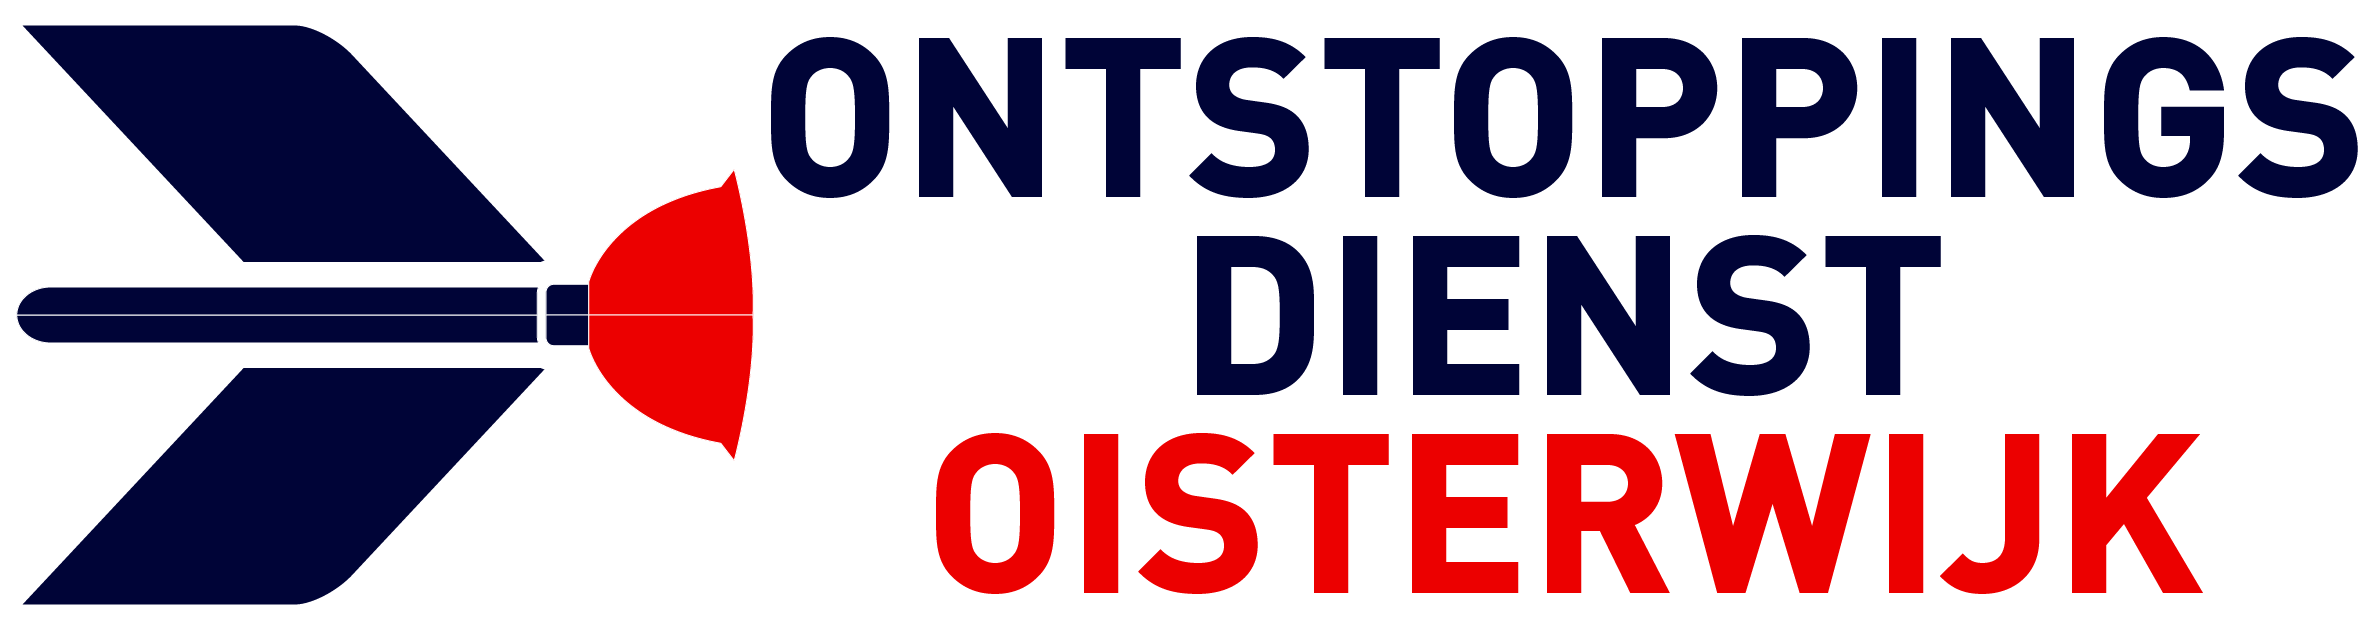 Ontstoppingsdienst Oisterwijk logo